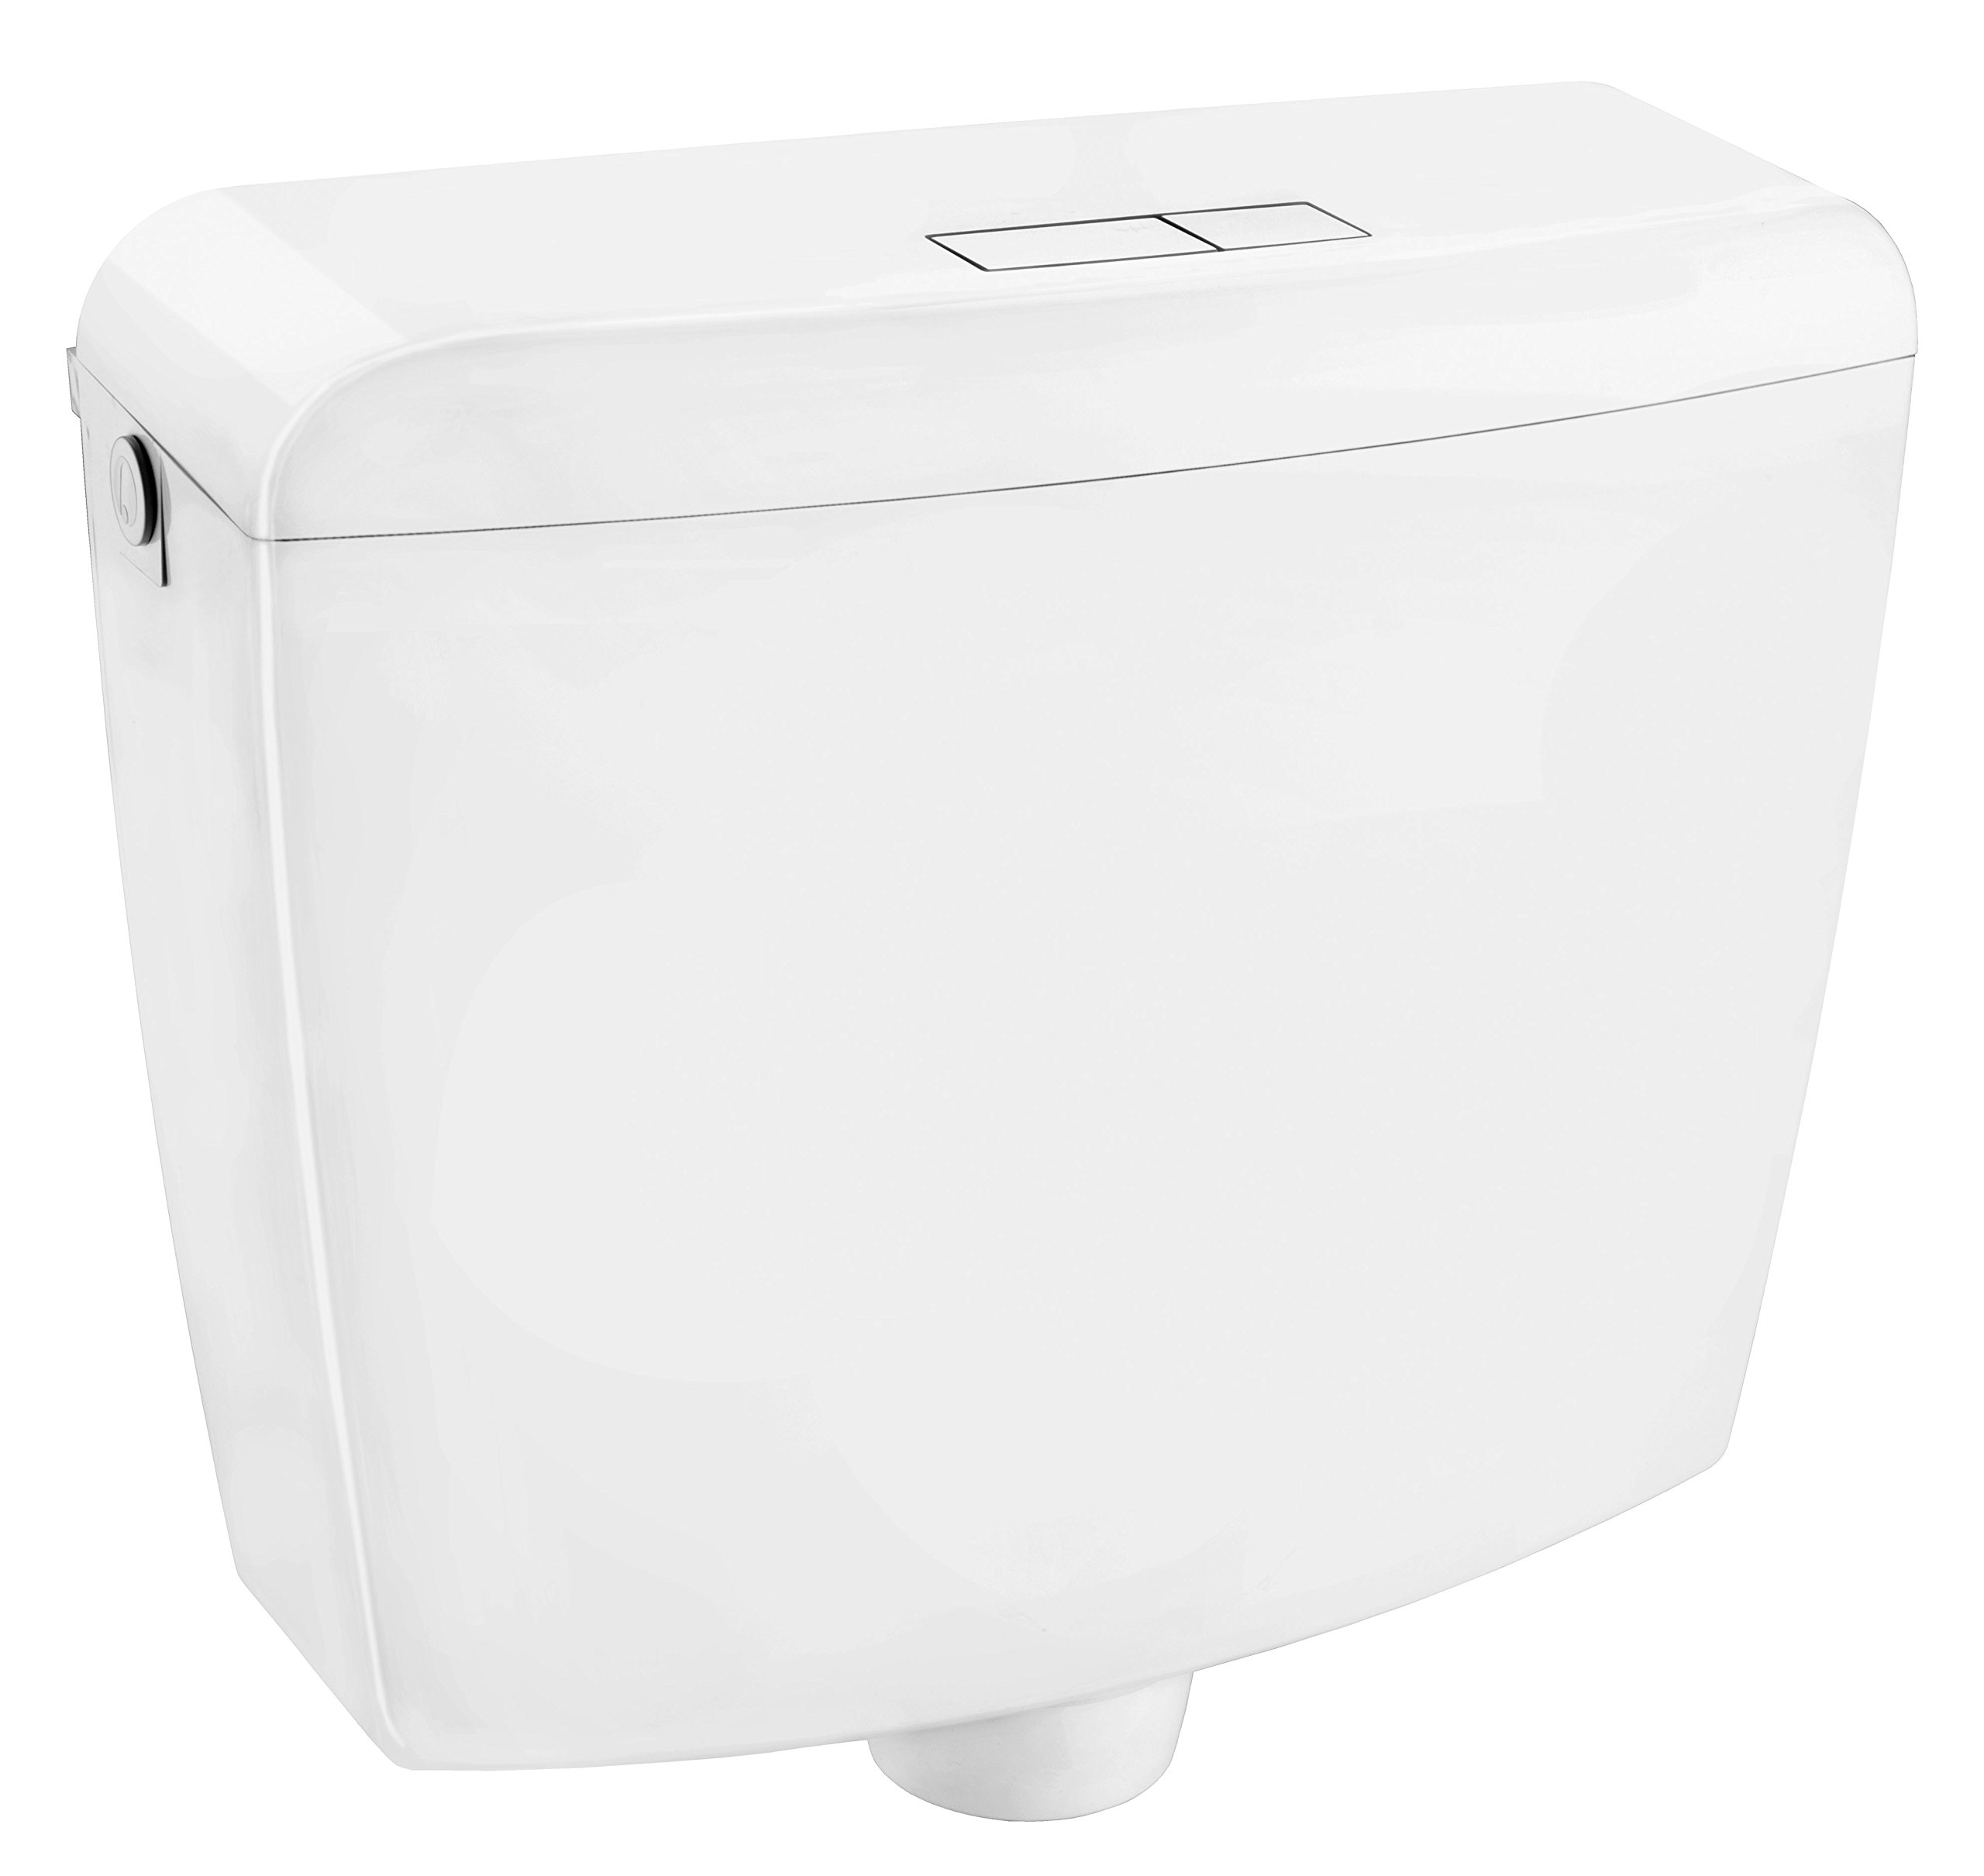 Cornat Spülkasten PONTOS, weiß / Zweimengenspülung / Toilettenspülung / Aufputzspülkasten |Toilette / Badezimmer / SPK1200